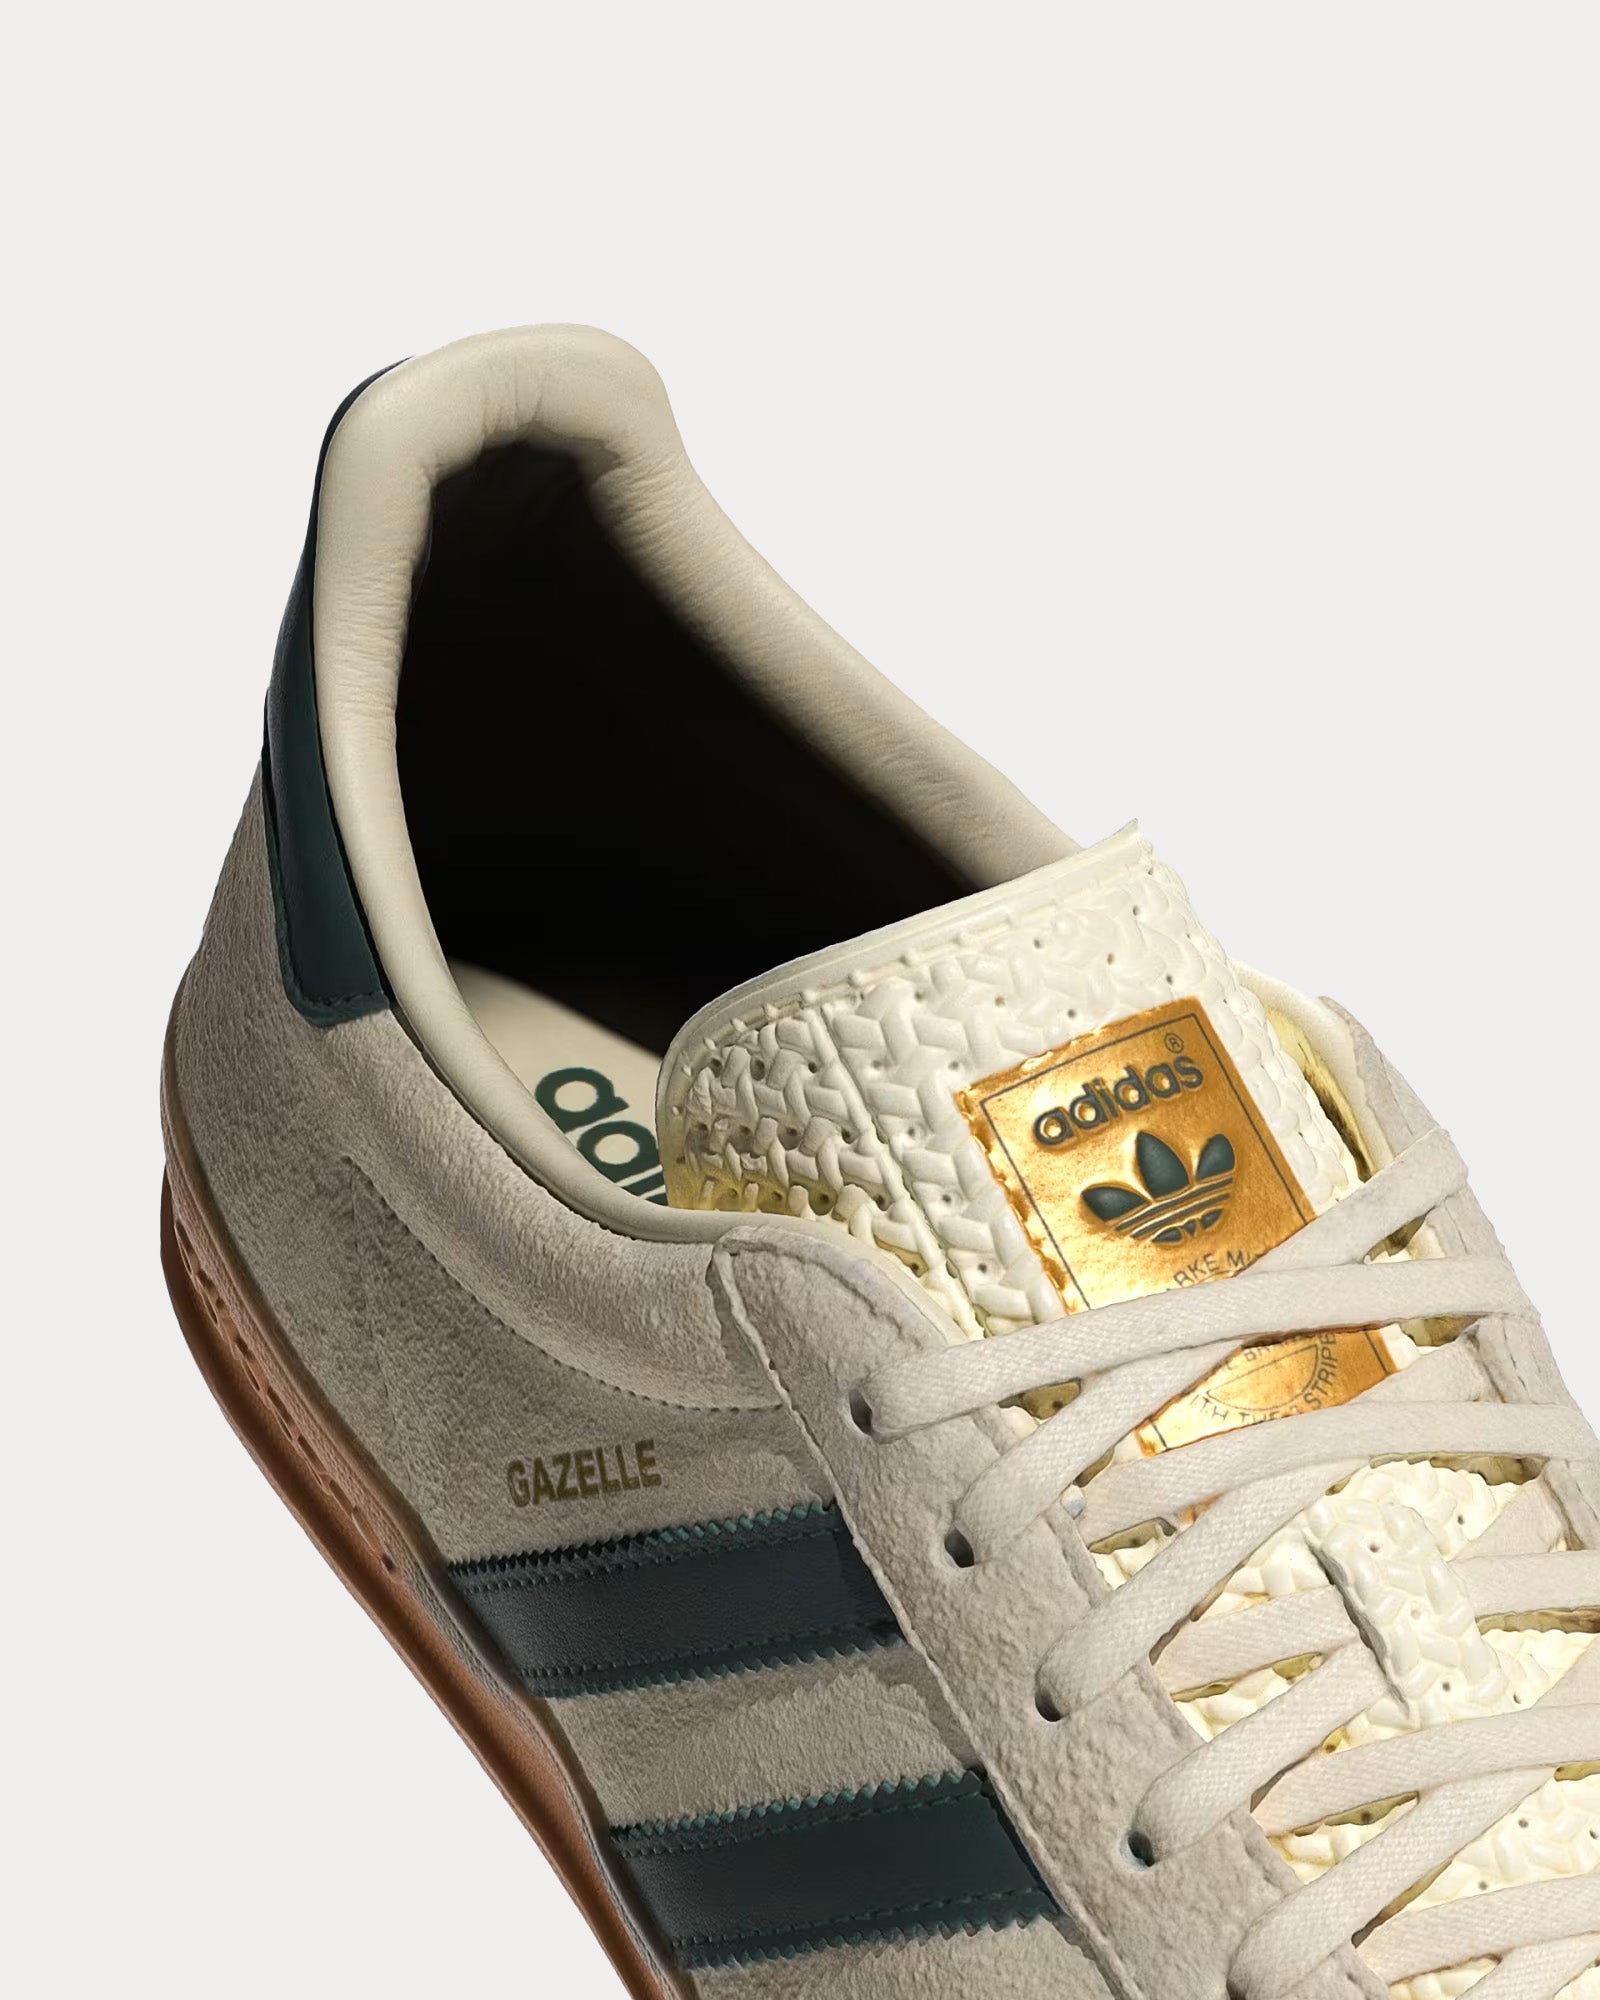 Adidas - Gazelle Indoors Cream White / Collegiate Green / Gum Low Top Sneakers